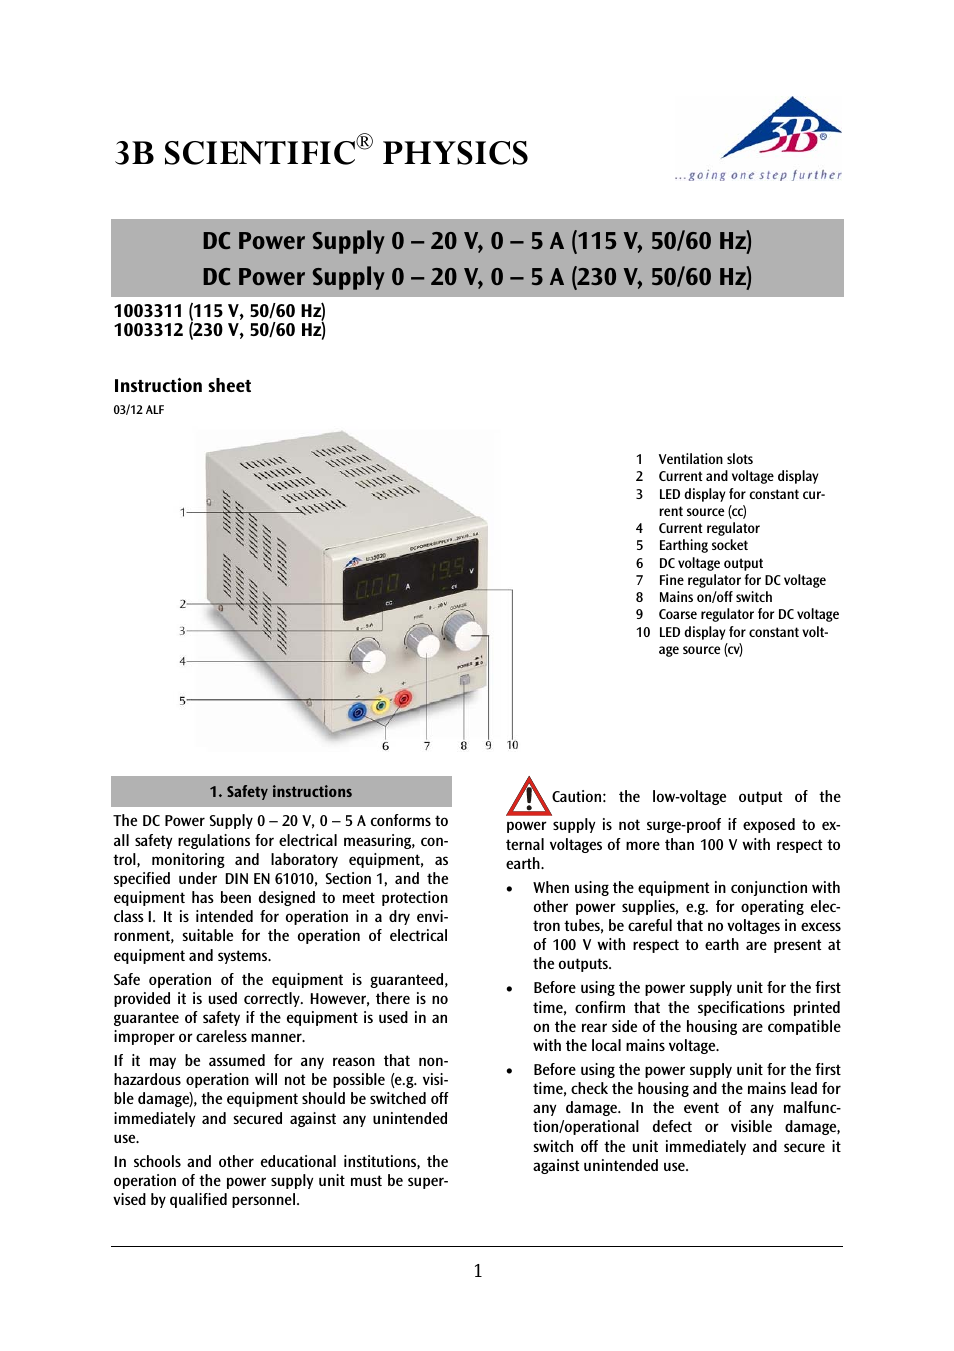 DC Power Supply 20 V, 5 A (115 V, 50__60 Hz)